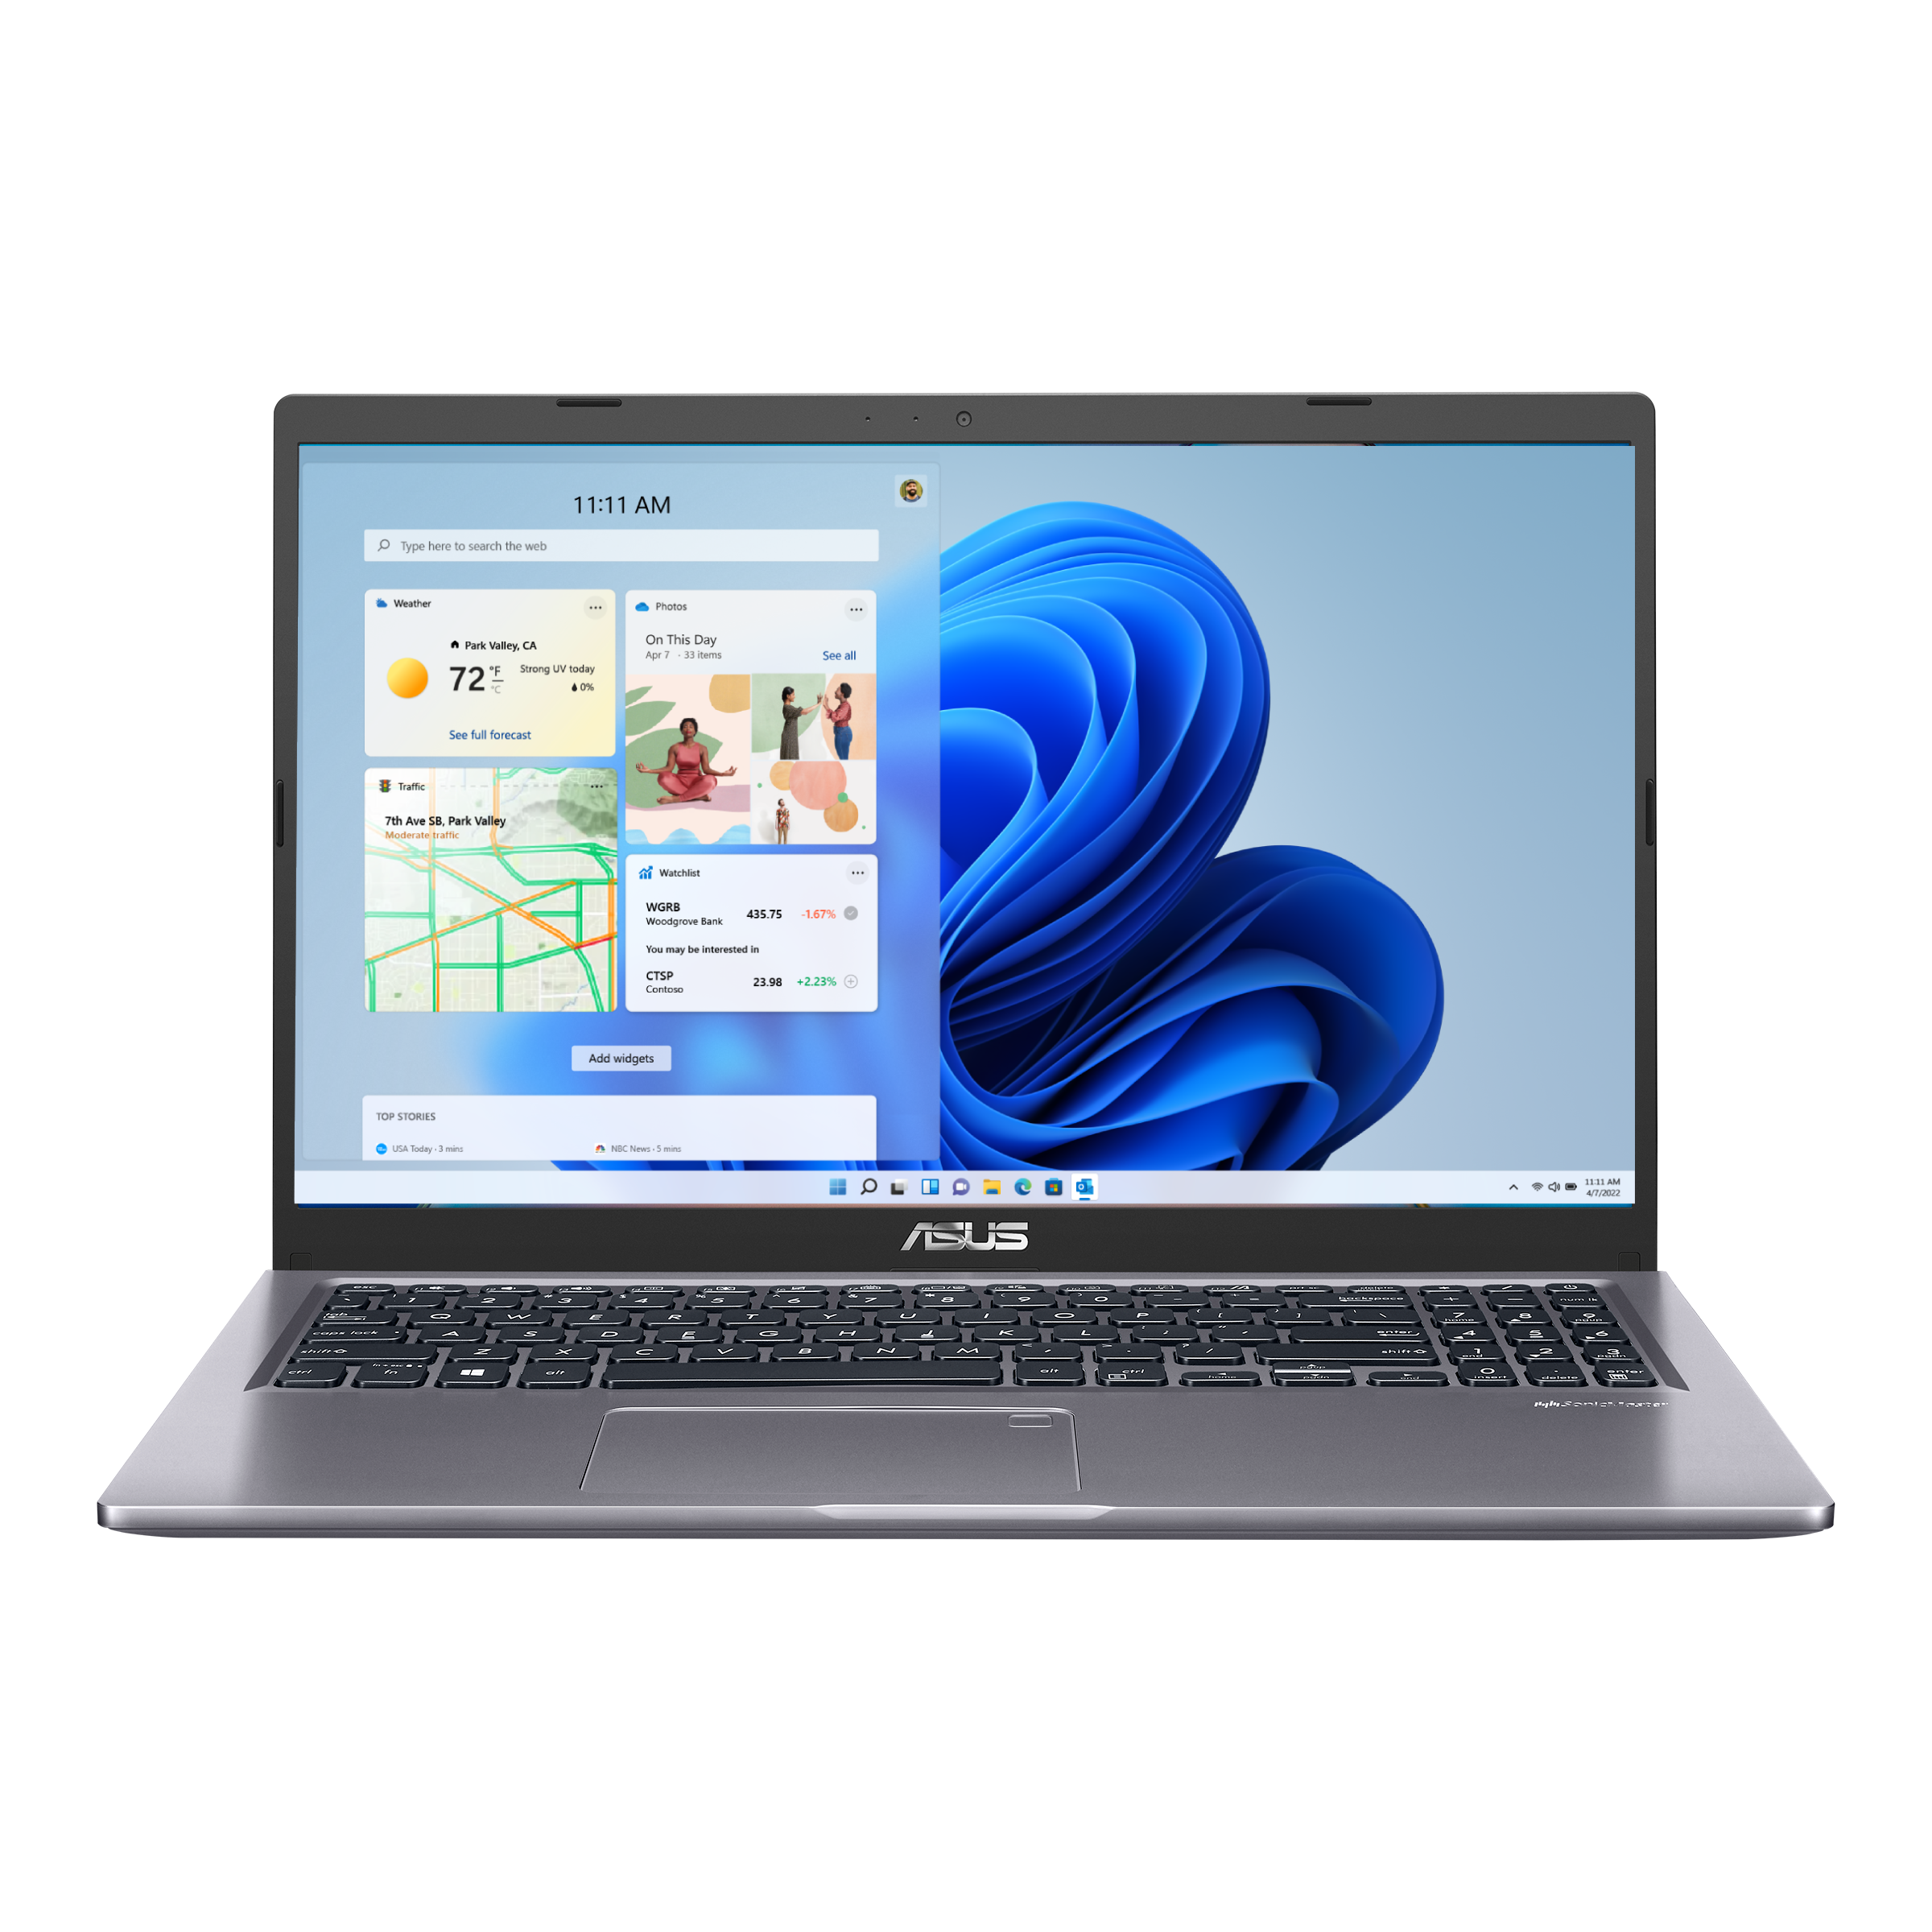 ASUS VivoBook 15 Thin and Light Laptop, 15.6” FHD, Intel i5-1035G1 CPU, 8GB  RAM, 512GB SSD, Backlit KB, Fingerprint, Windows 10, Slate Gray